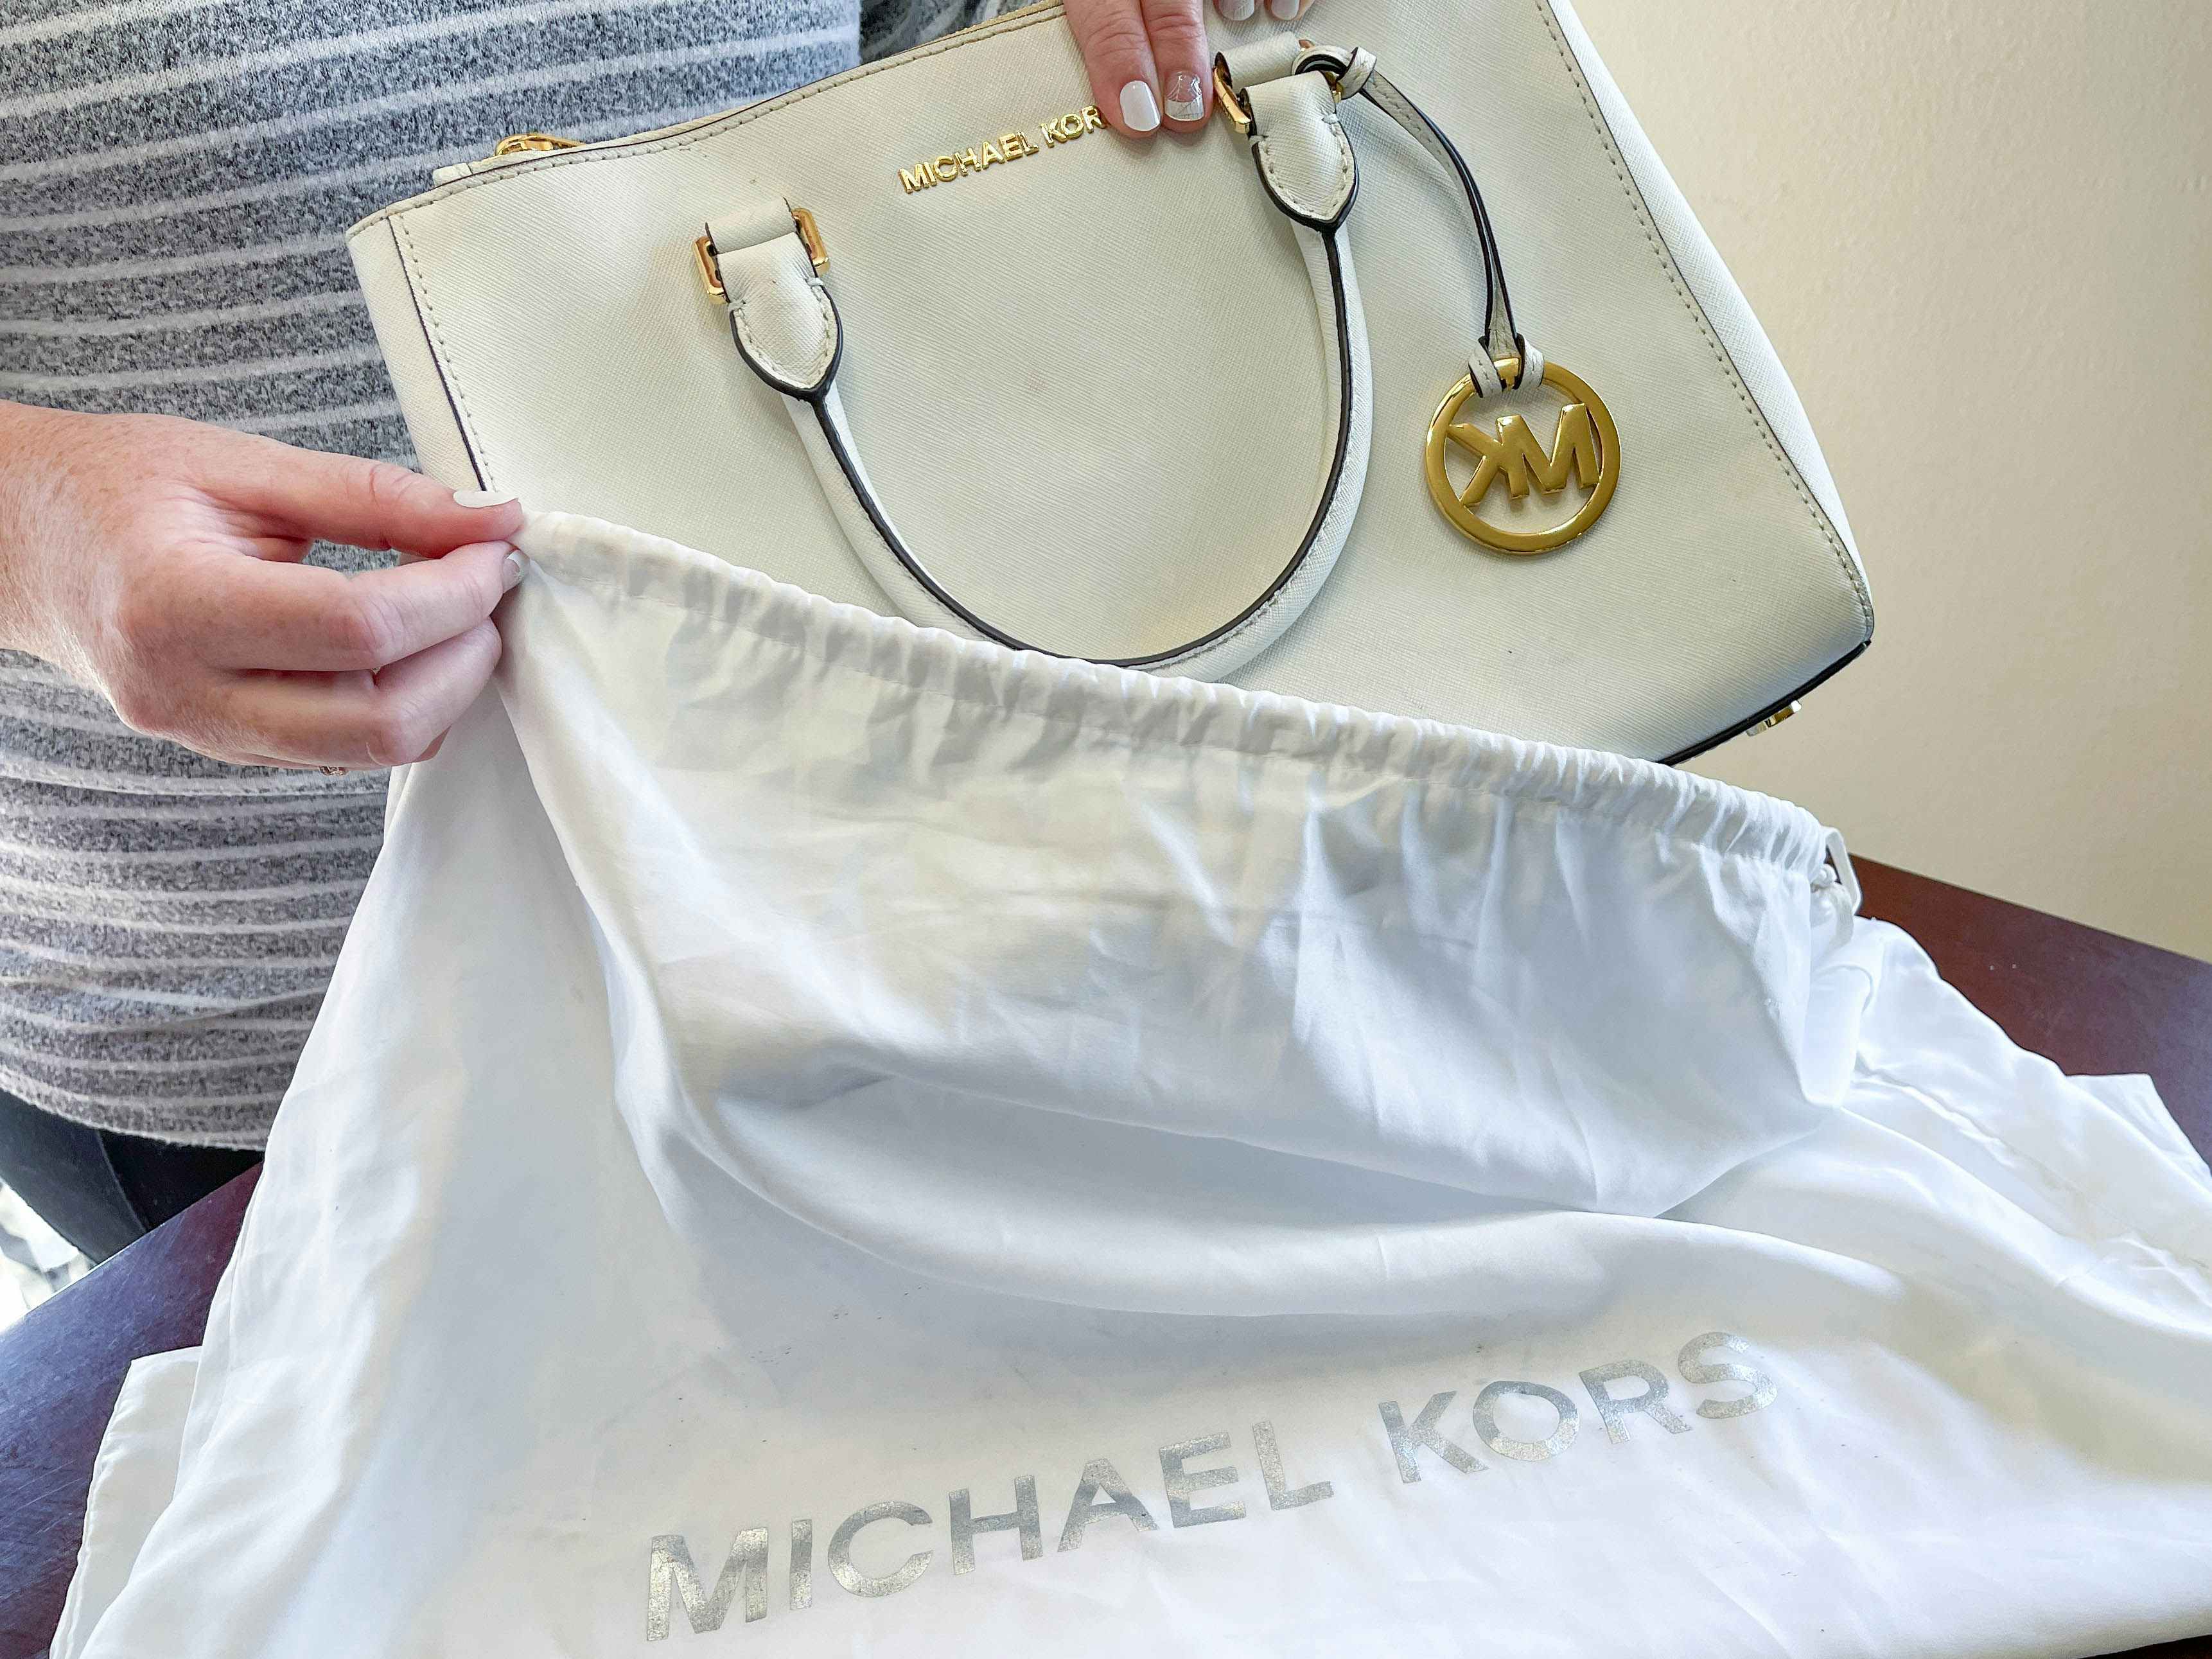 a person putting a michaels kors handbag in dust bag 